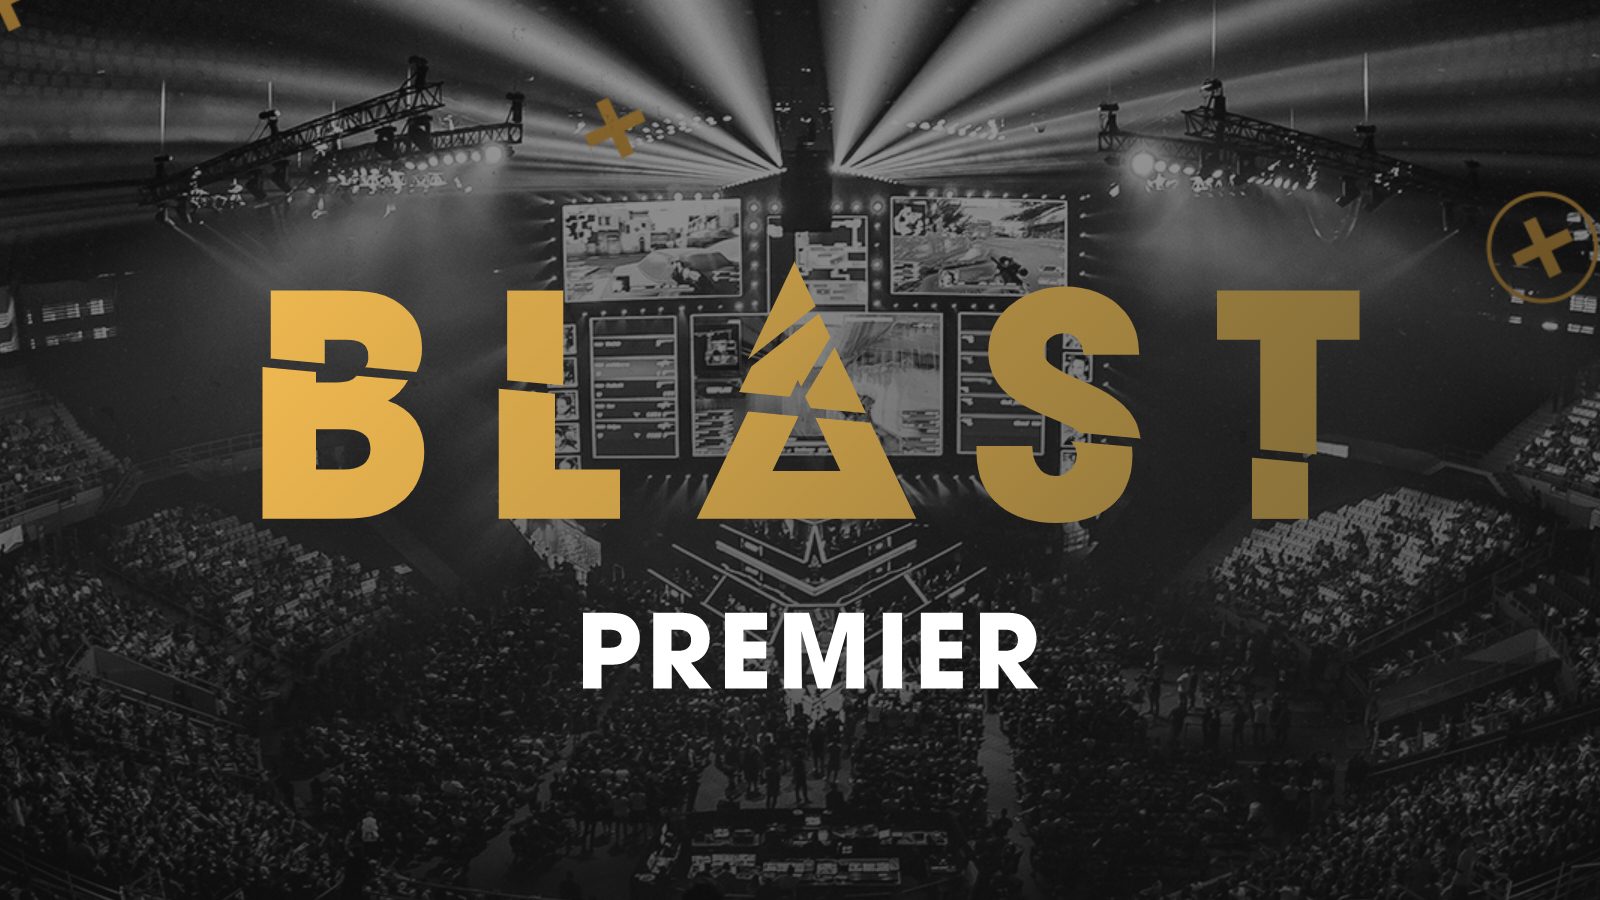 Blast Premier Fall Final пройдёт в столице Дании — Копенгагене